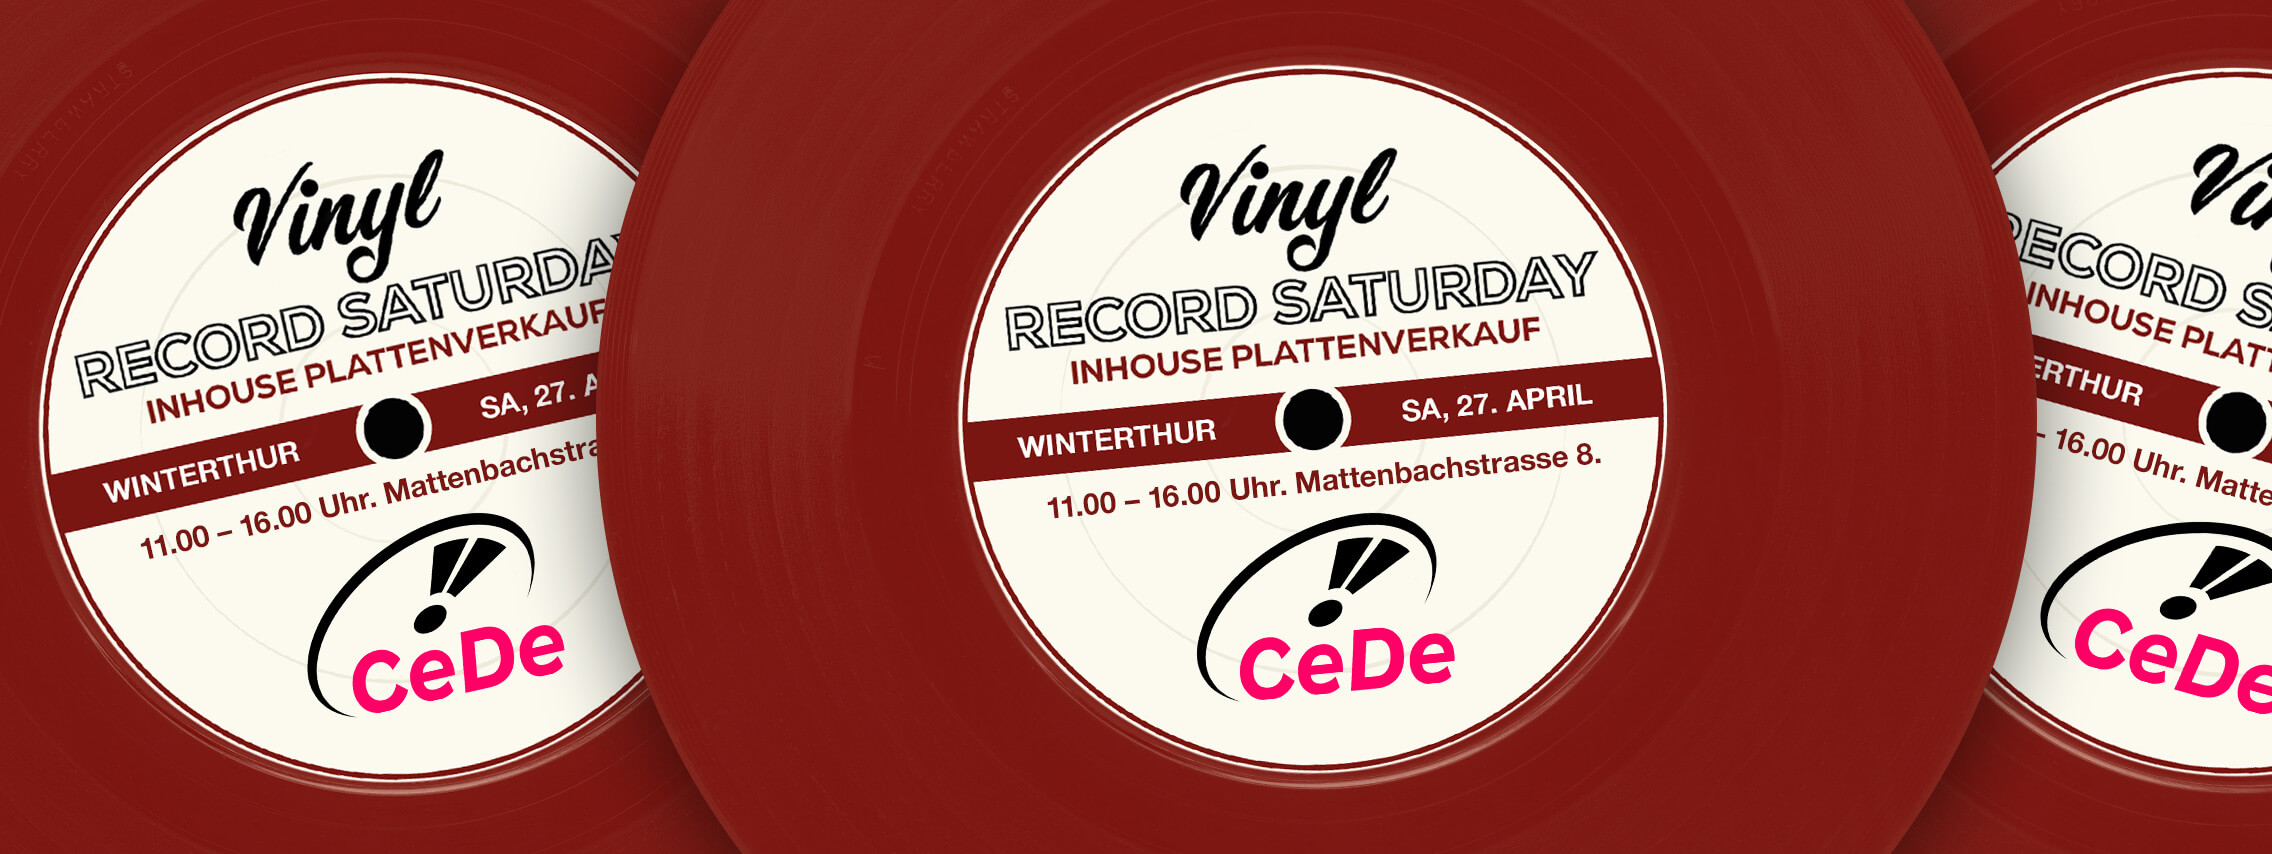 Vinyl Record Saturday